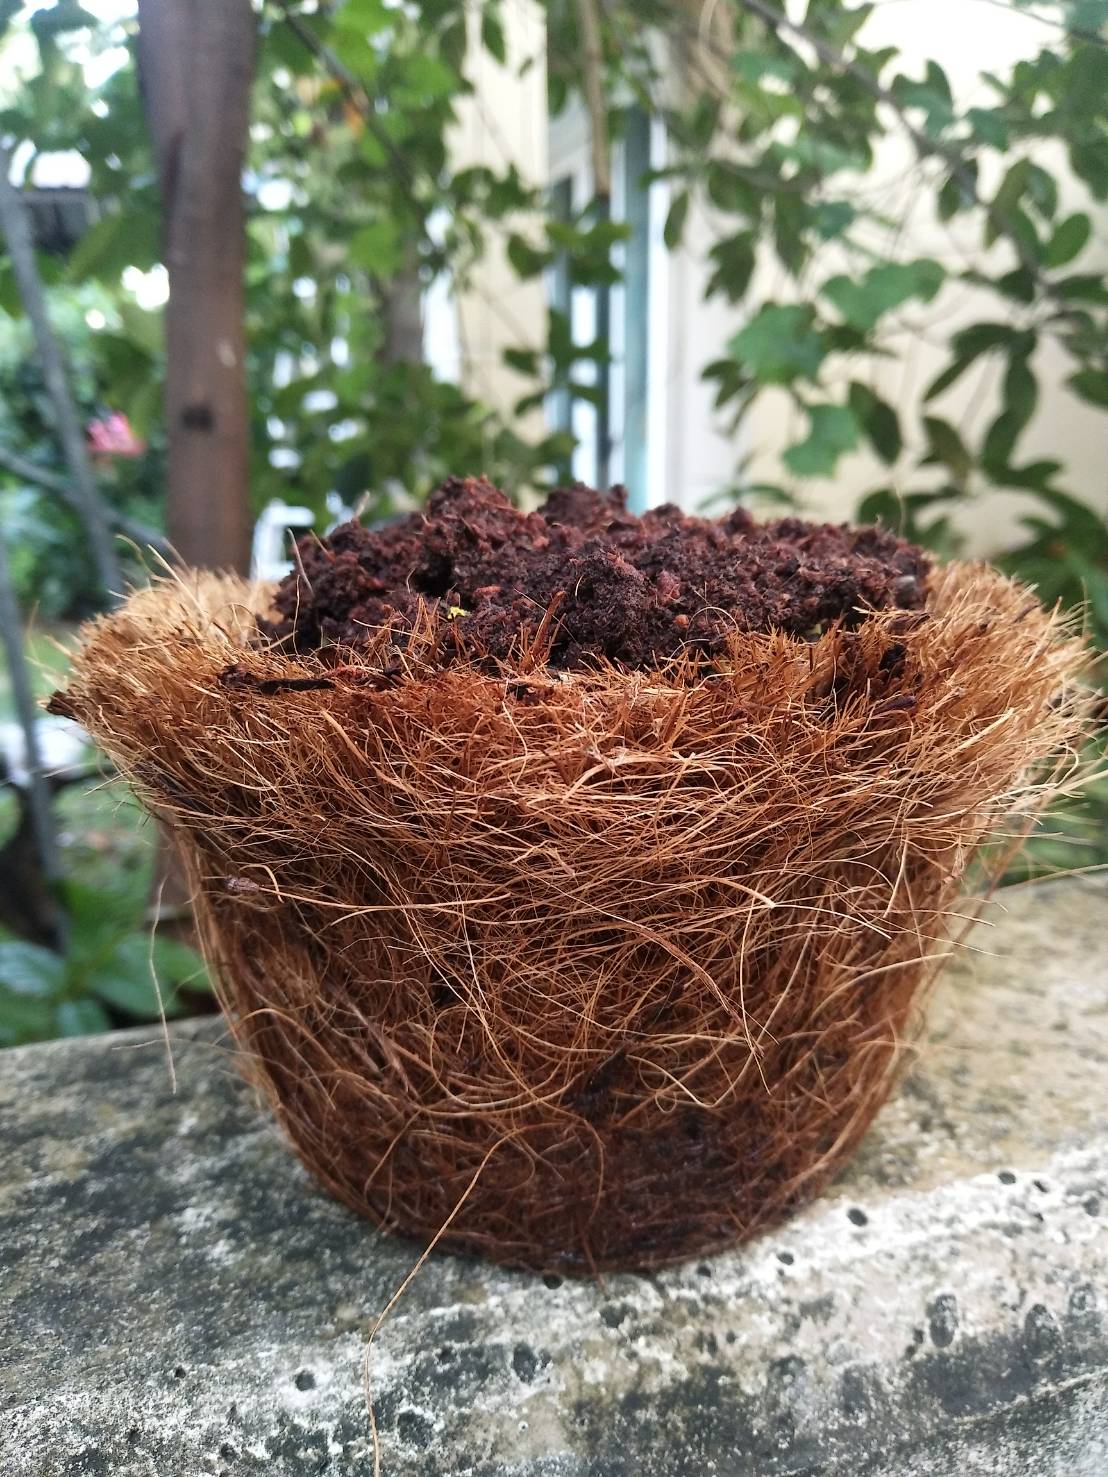 Cheap Coir Pot – Paper and Pulp Pot Substitute